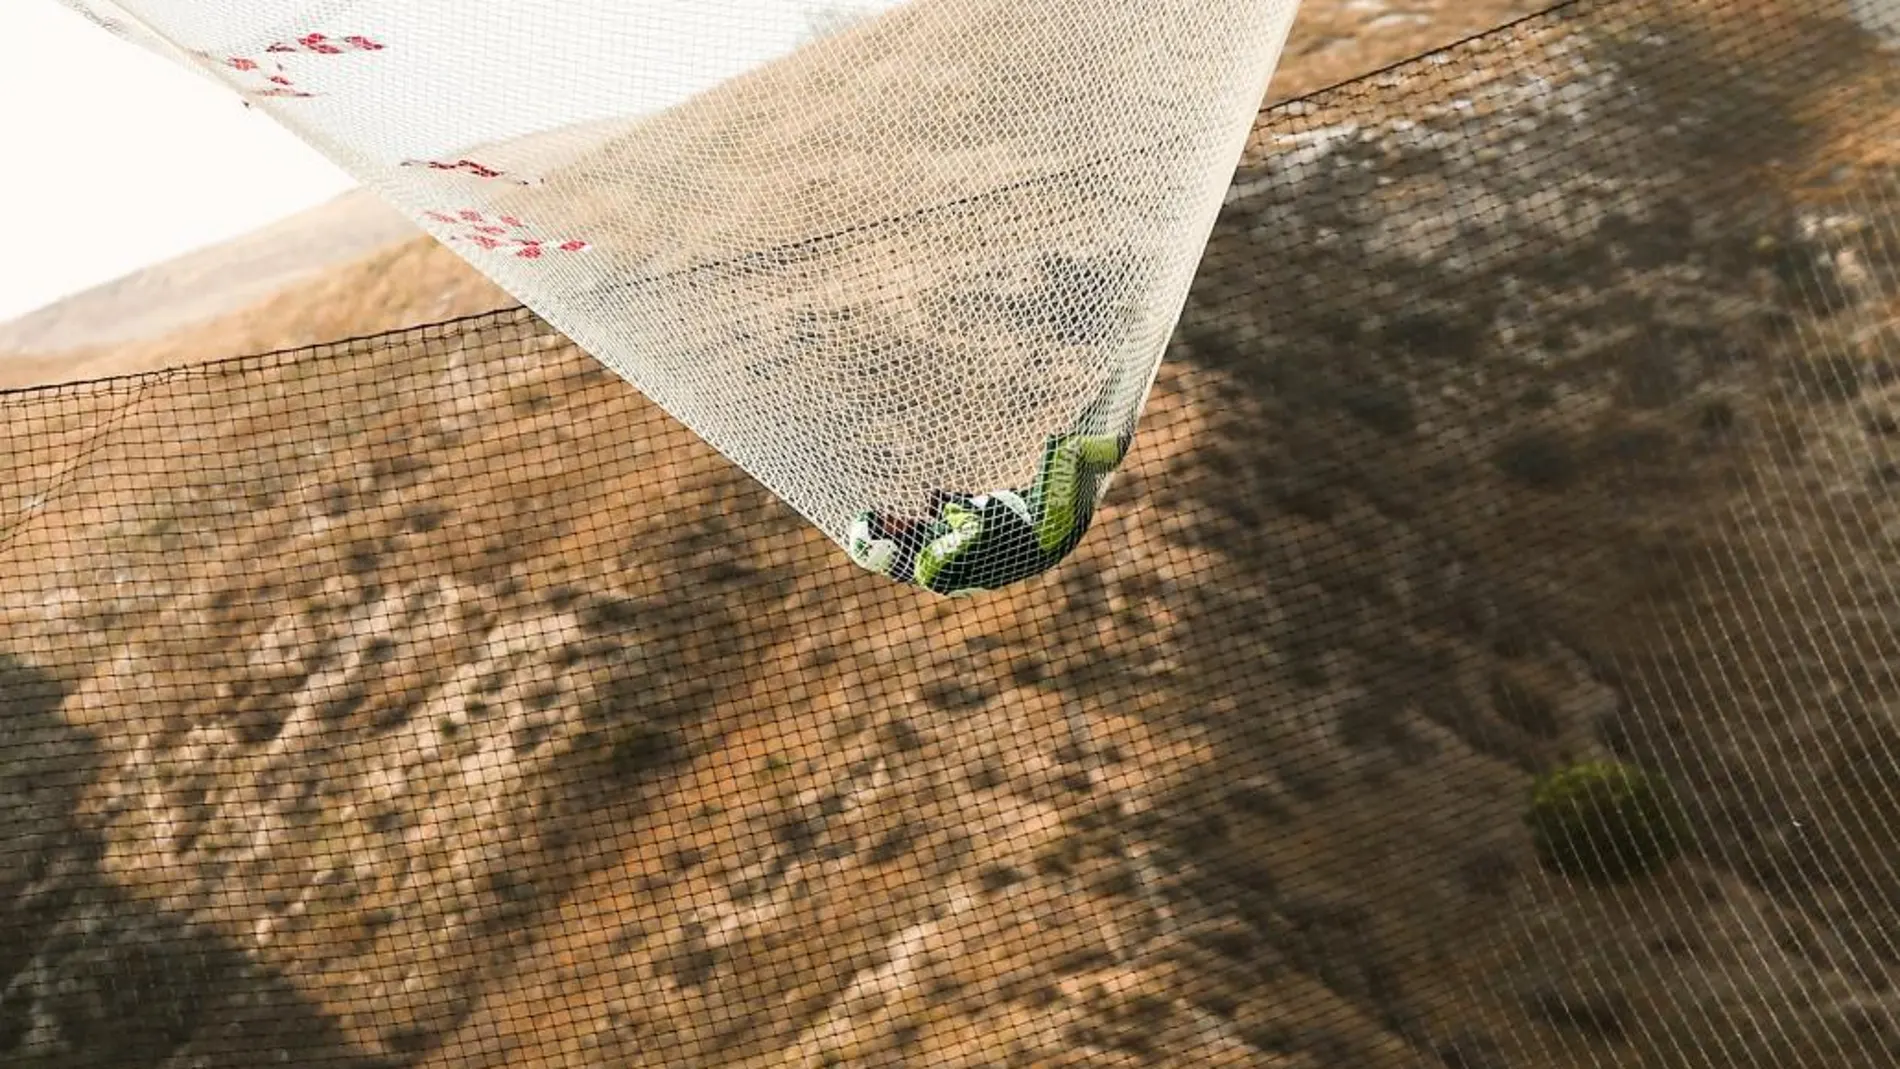 Luke Aikins bate el récord de salto sin paracaídas